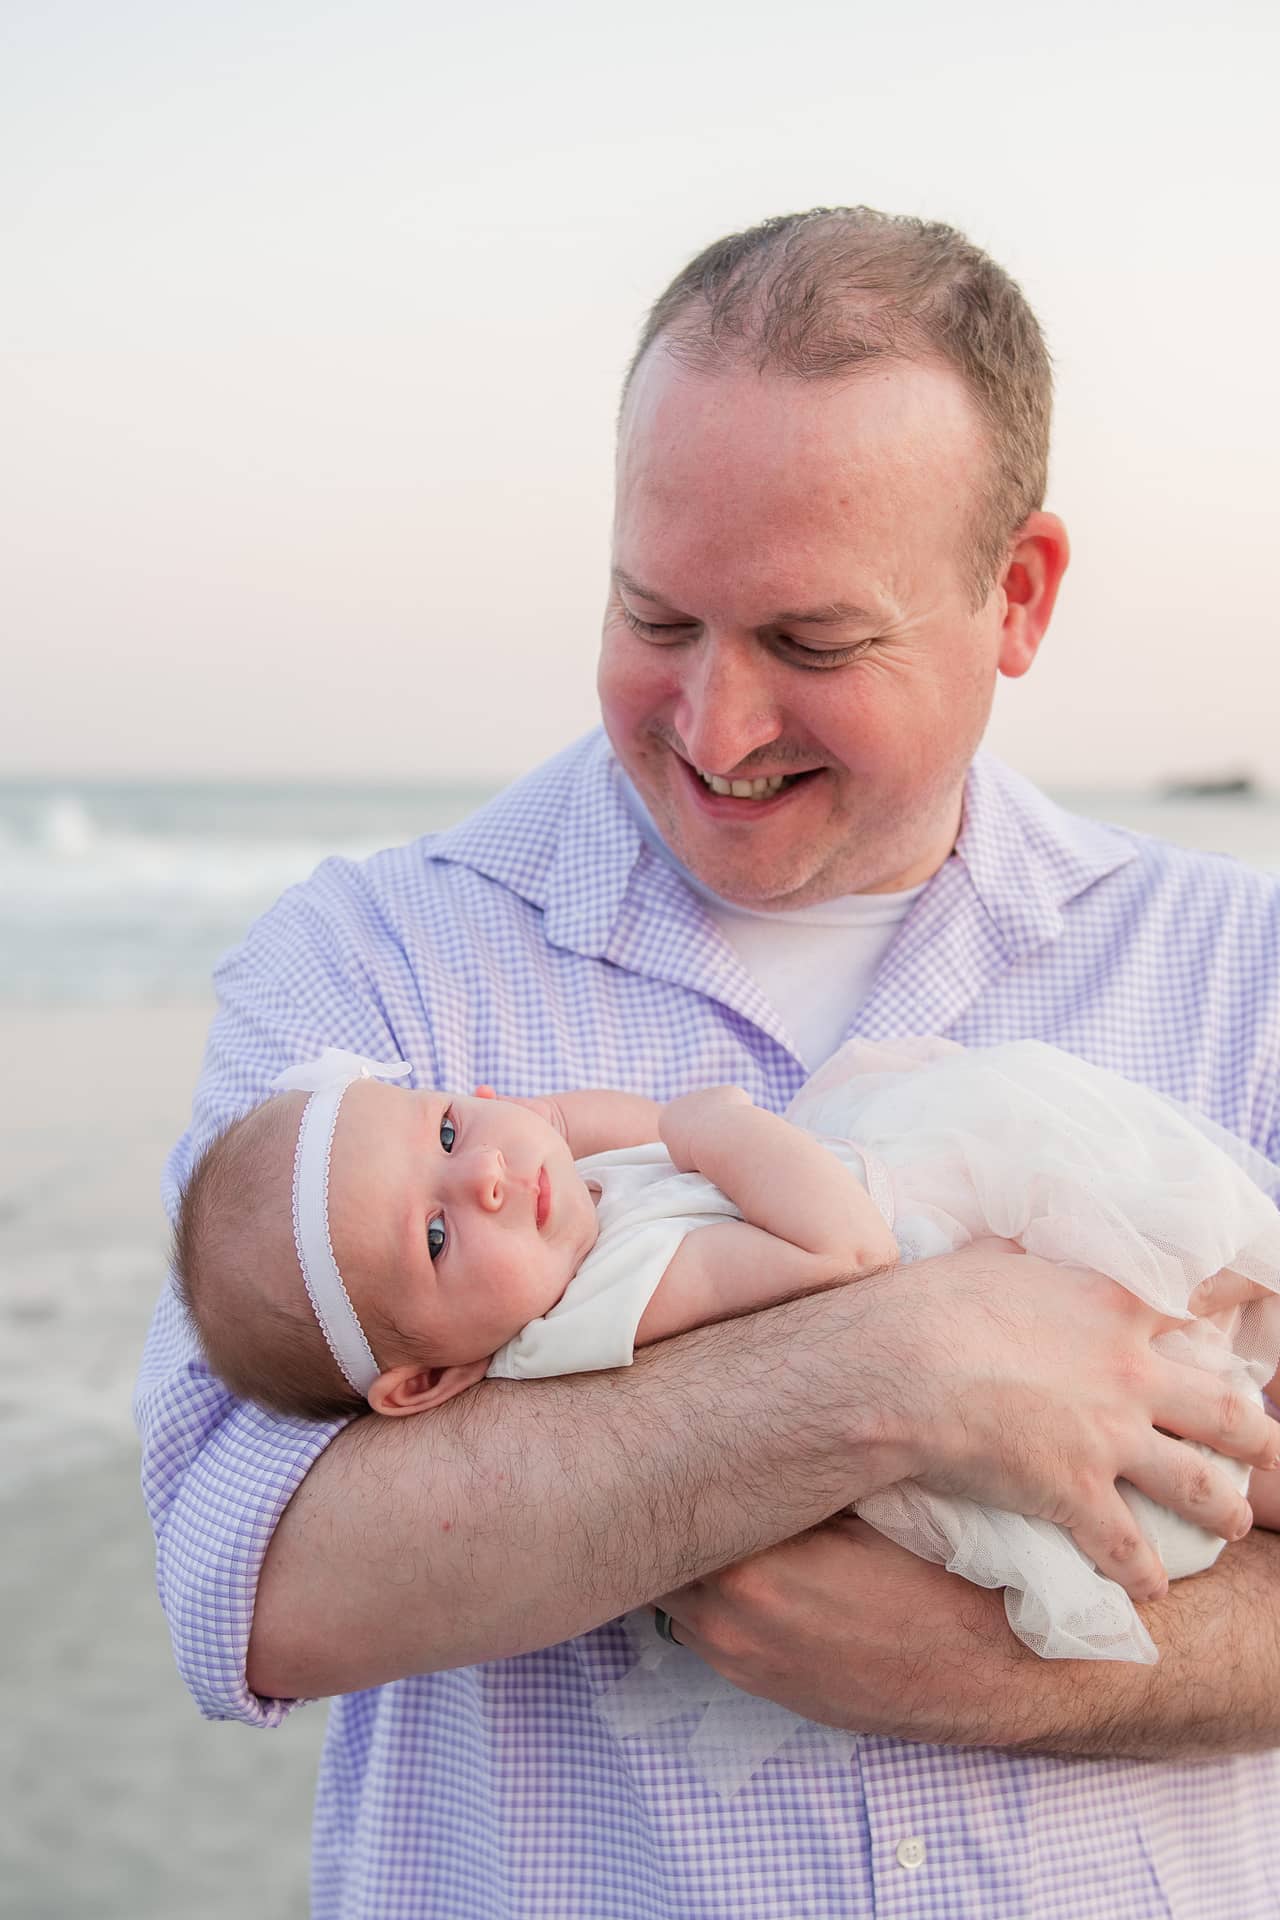 rhode island newborn photographer captures moment with newborn and dad